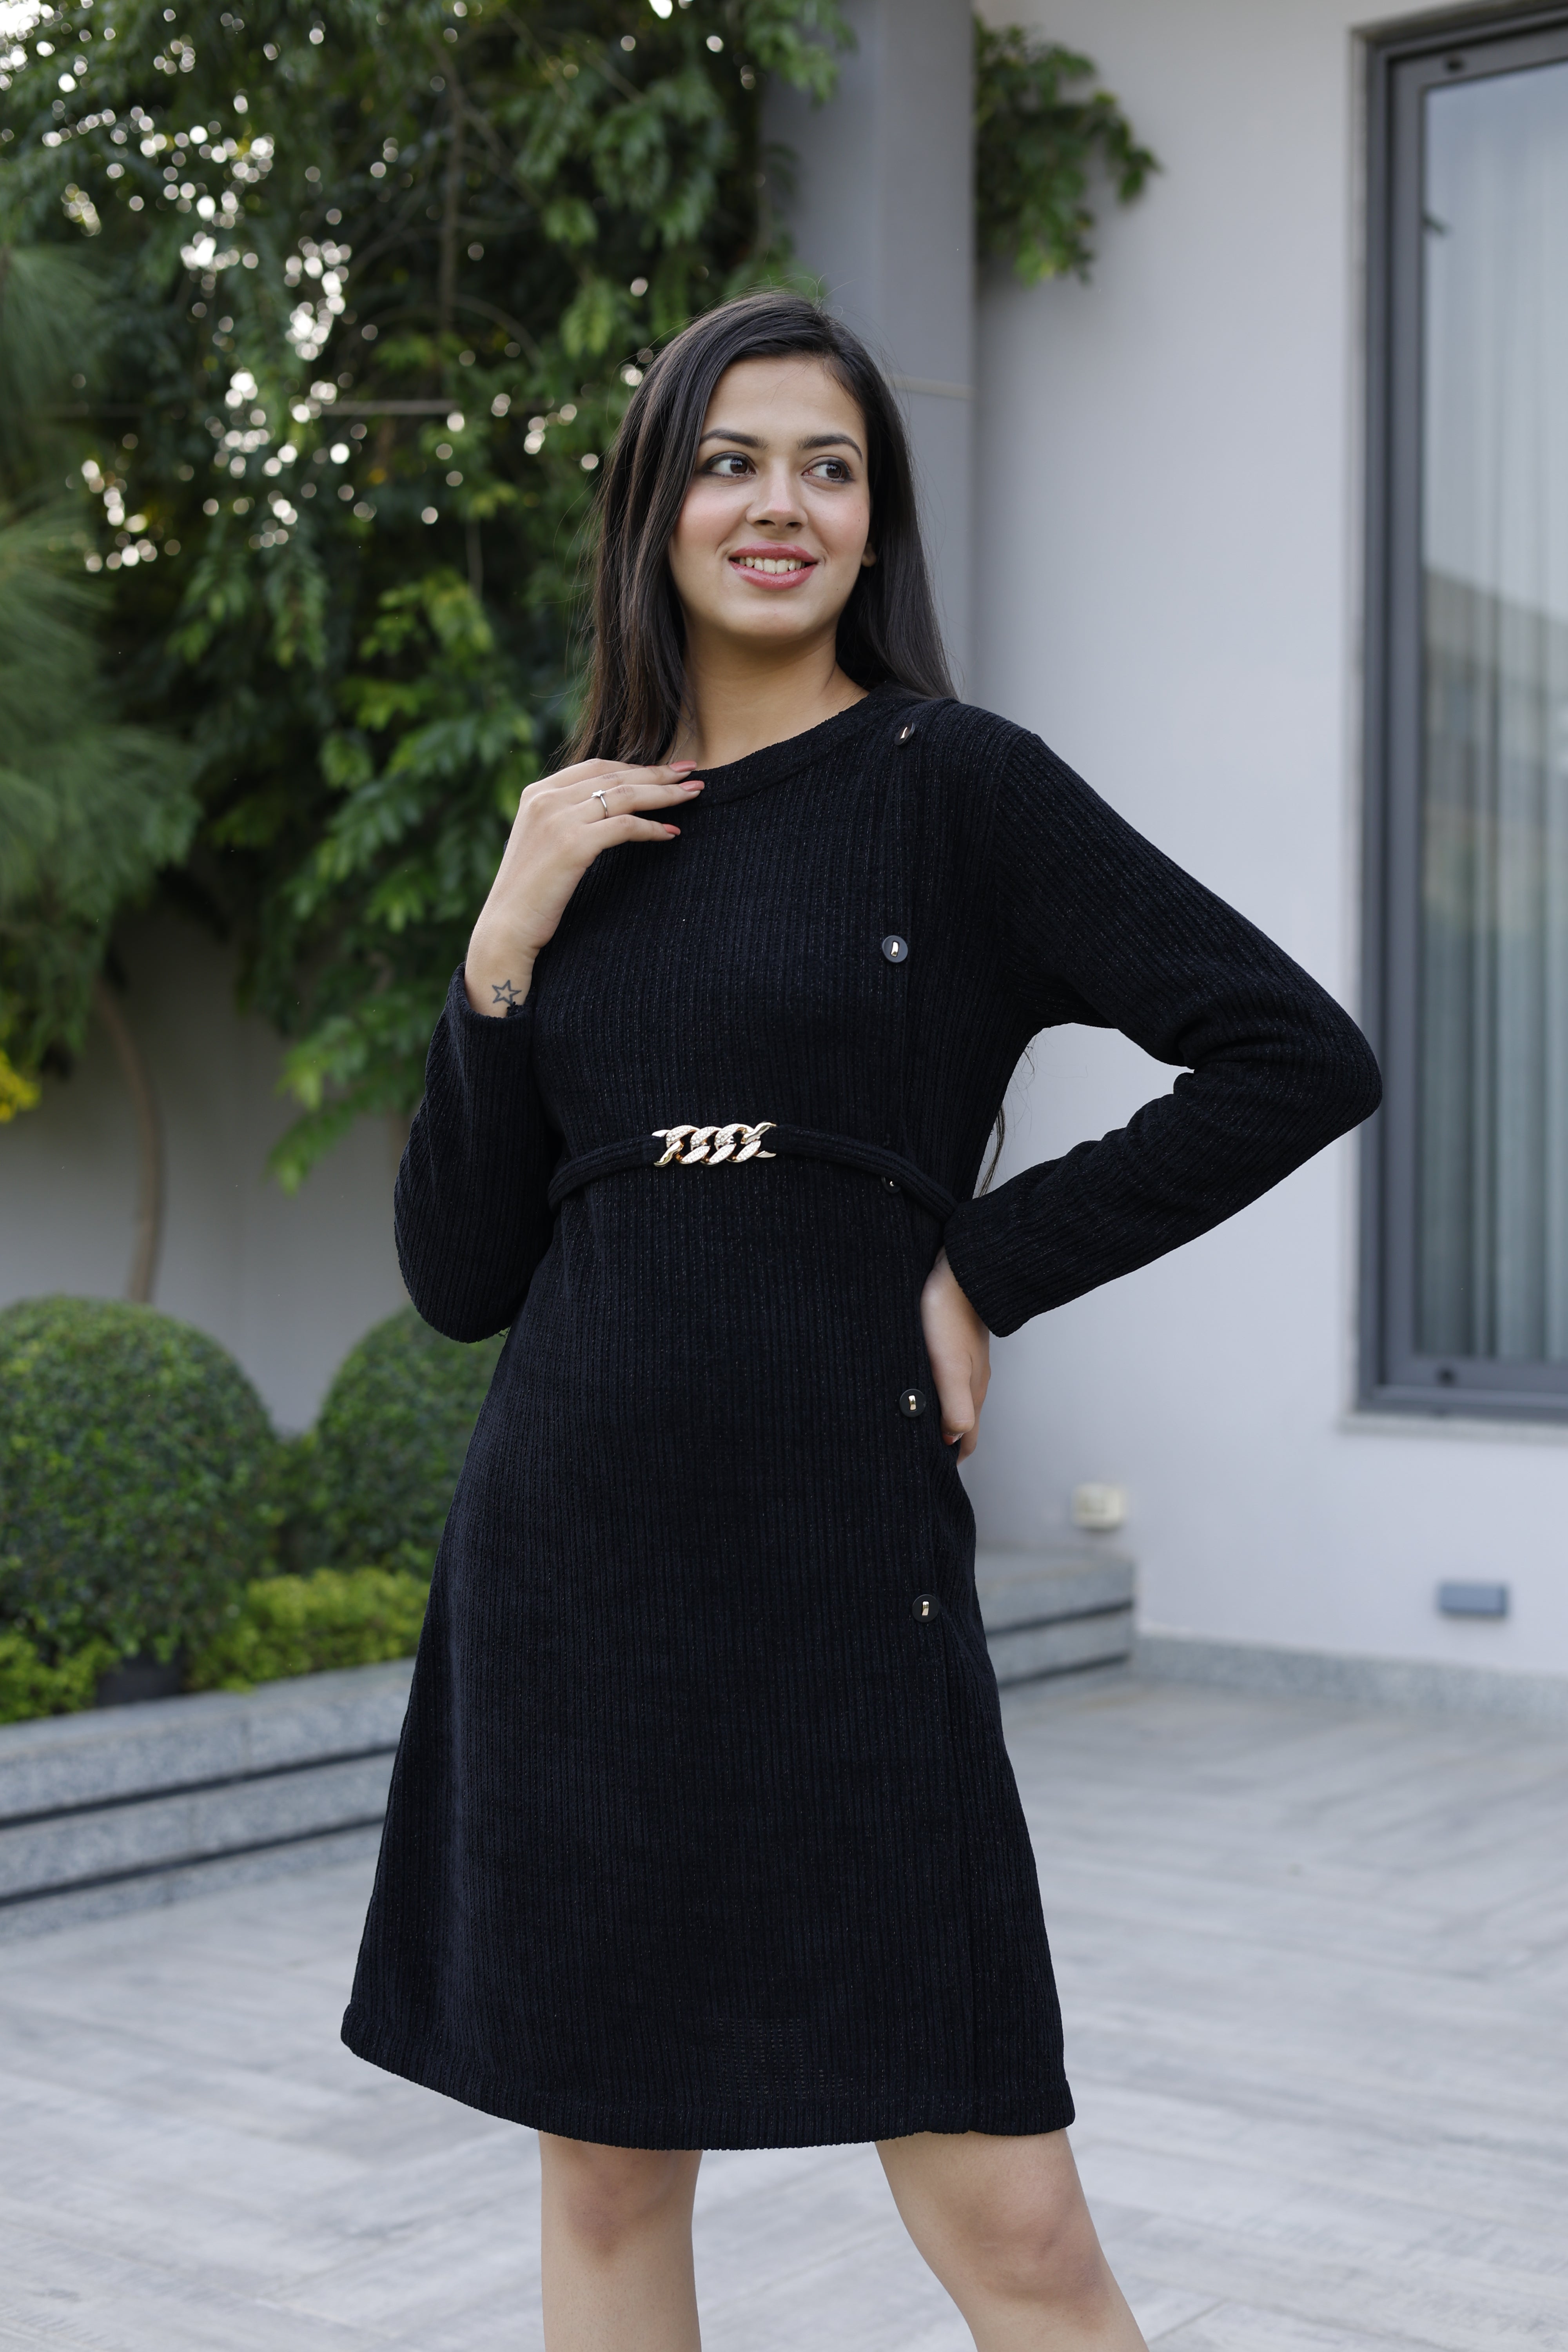 Women Black Partywear Gown Bollywood Style Kurta Kurti Dupatta Designer  Dress | eBay